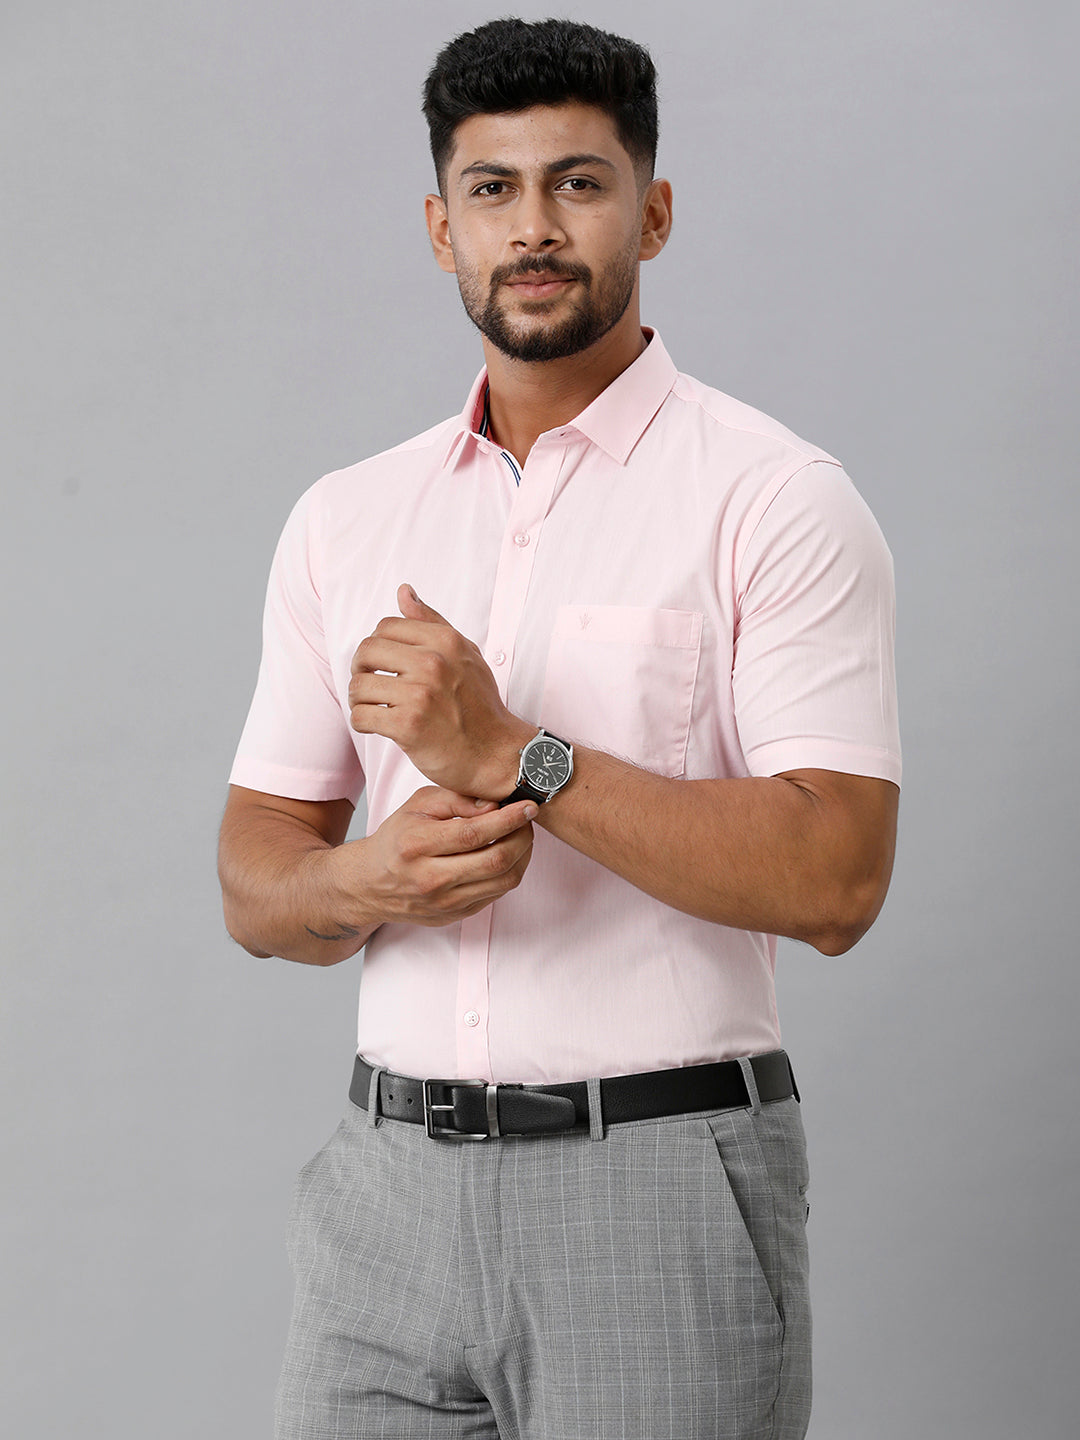 Mens Premium Cotton Formal Shirt Half Sleeves Light Pink MH G115-Side view